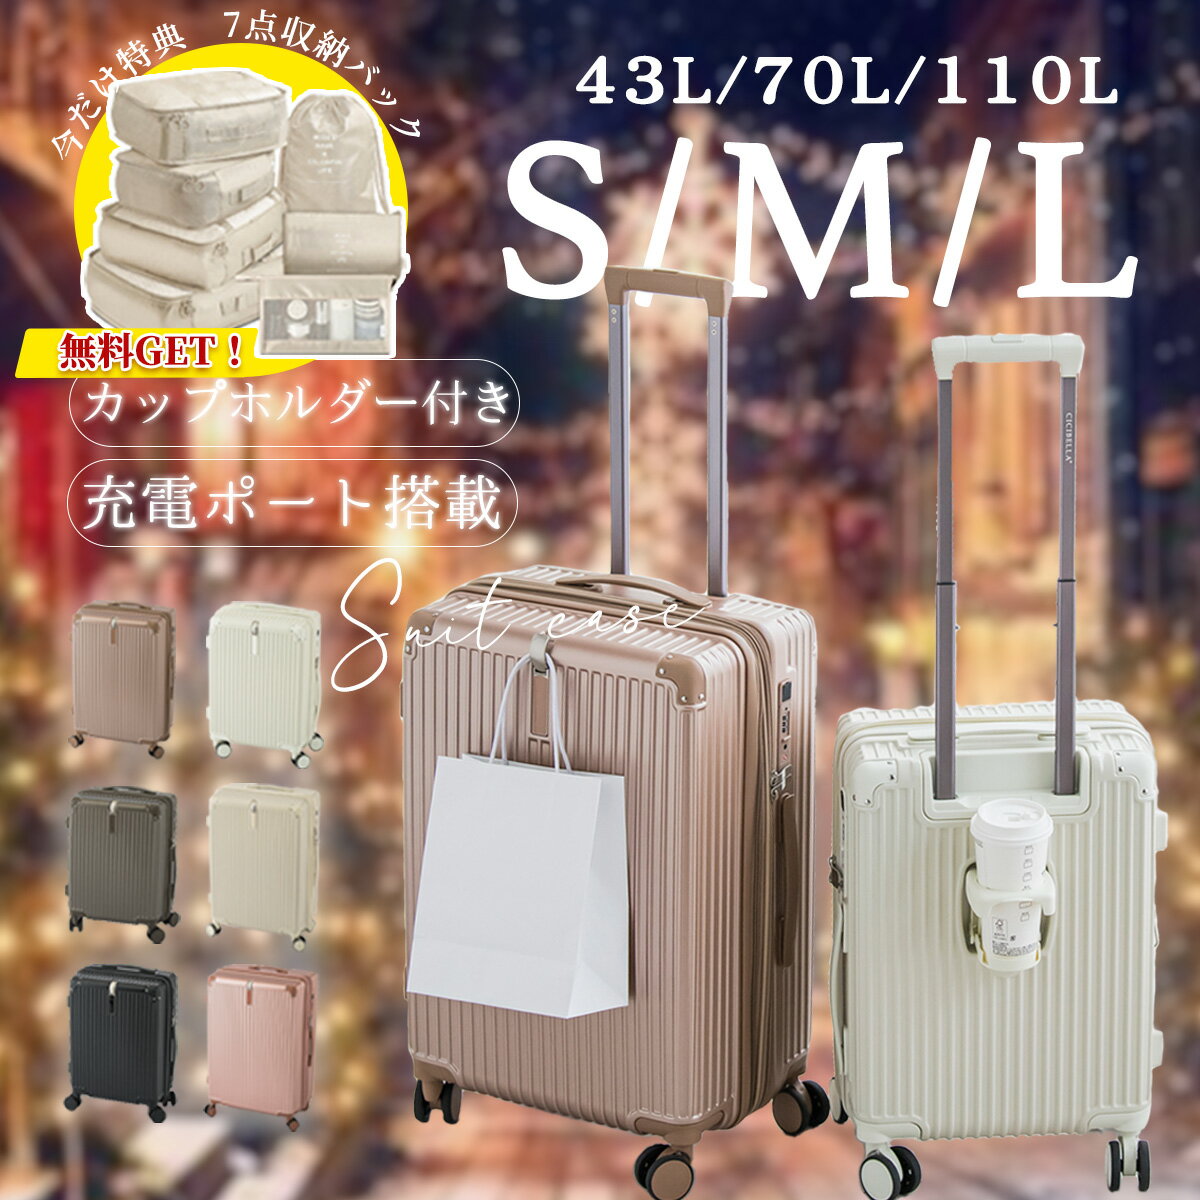 cicibellaスーツケース USBポート付き スーツケース Mサイズ キャリーケース Sサイズ 41L 機内持ち込み 3-5日用 泊まる カップホルダー付き 軽量設計 多機能スーツケース 大容量 GOTOトラベル 国内旅行 送料無料 S/M/L 43L/70L /110L キャスターカバー